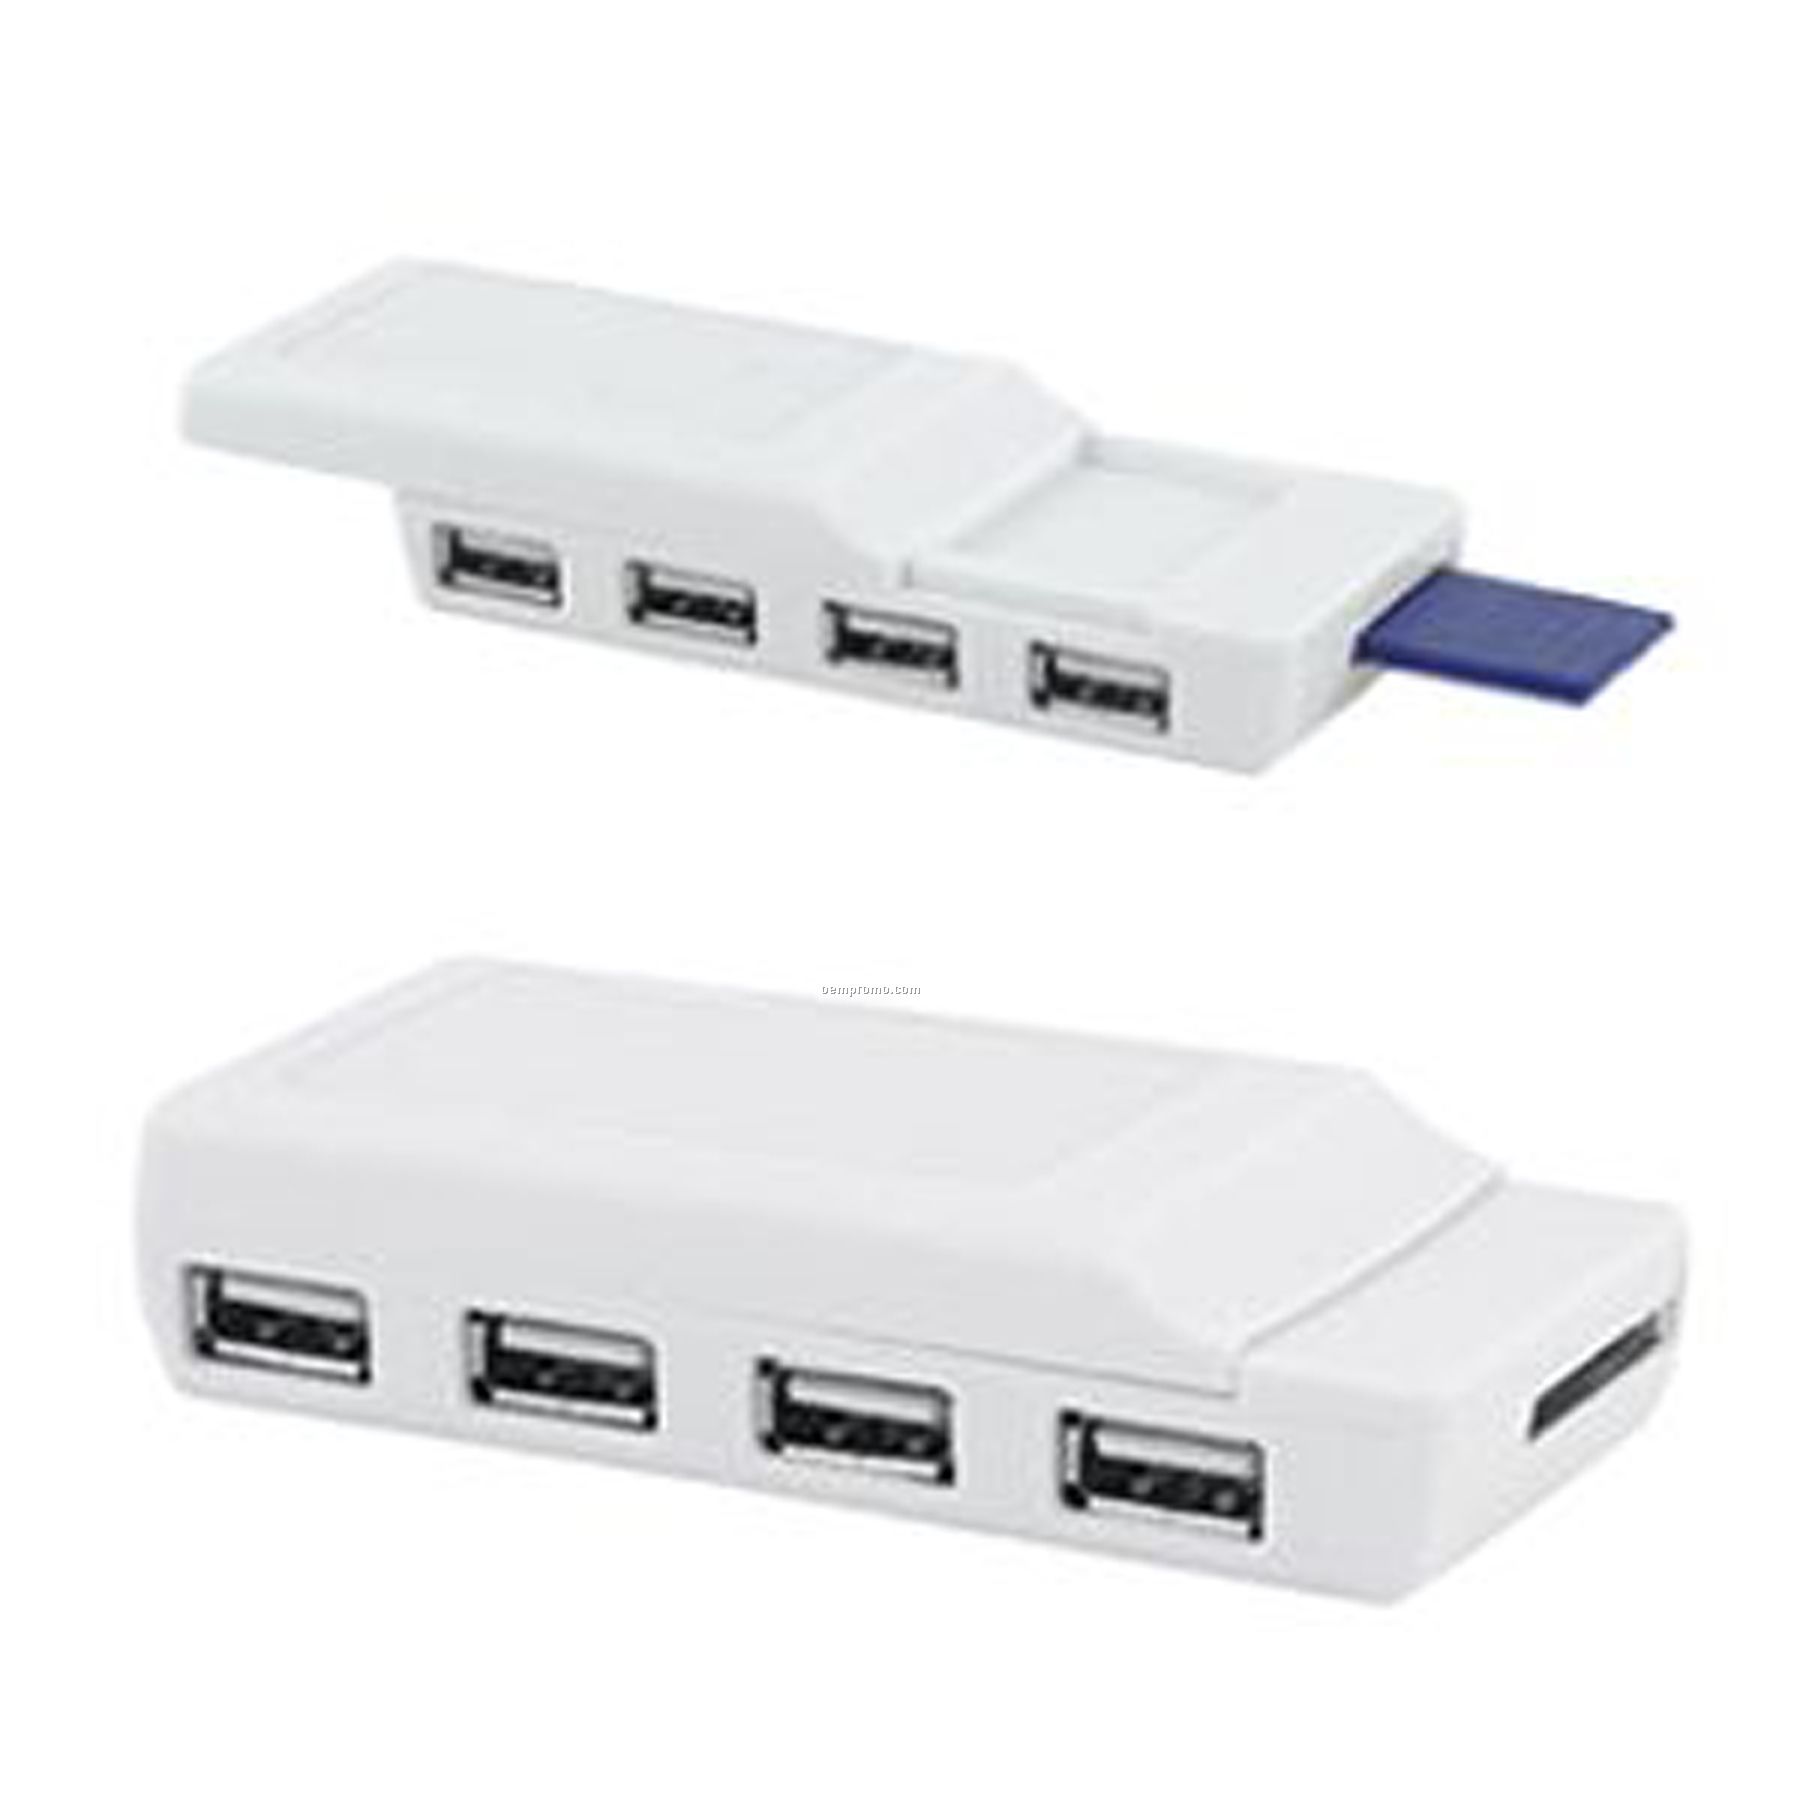 USB 4 Port Hub And Card Reader